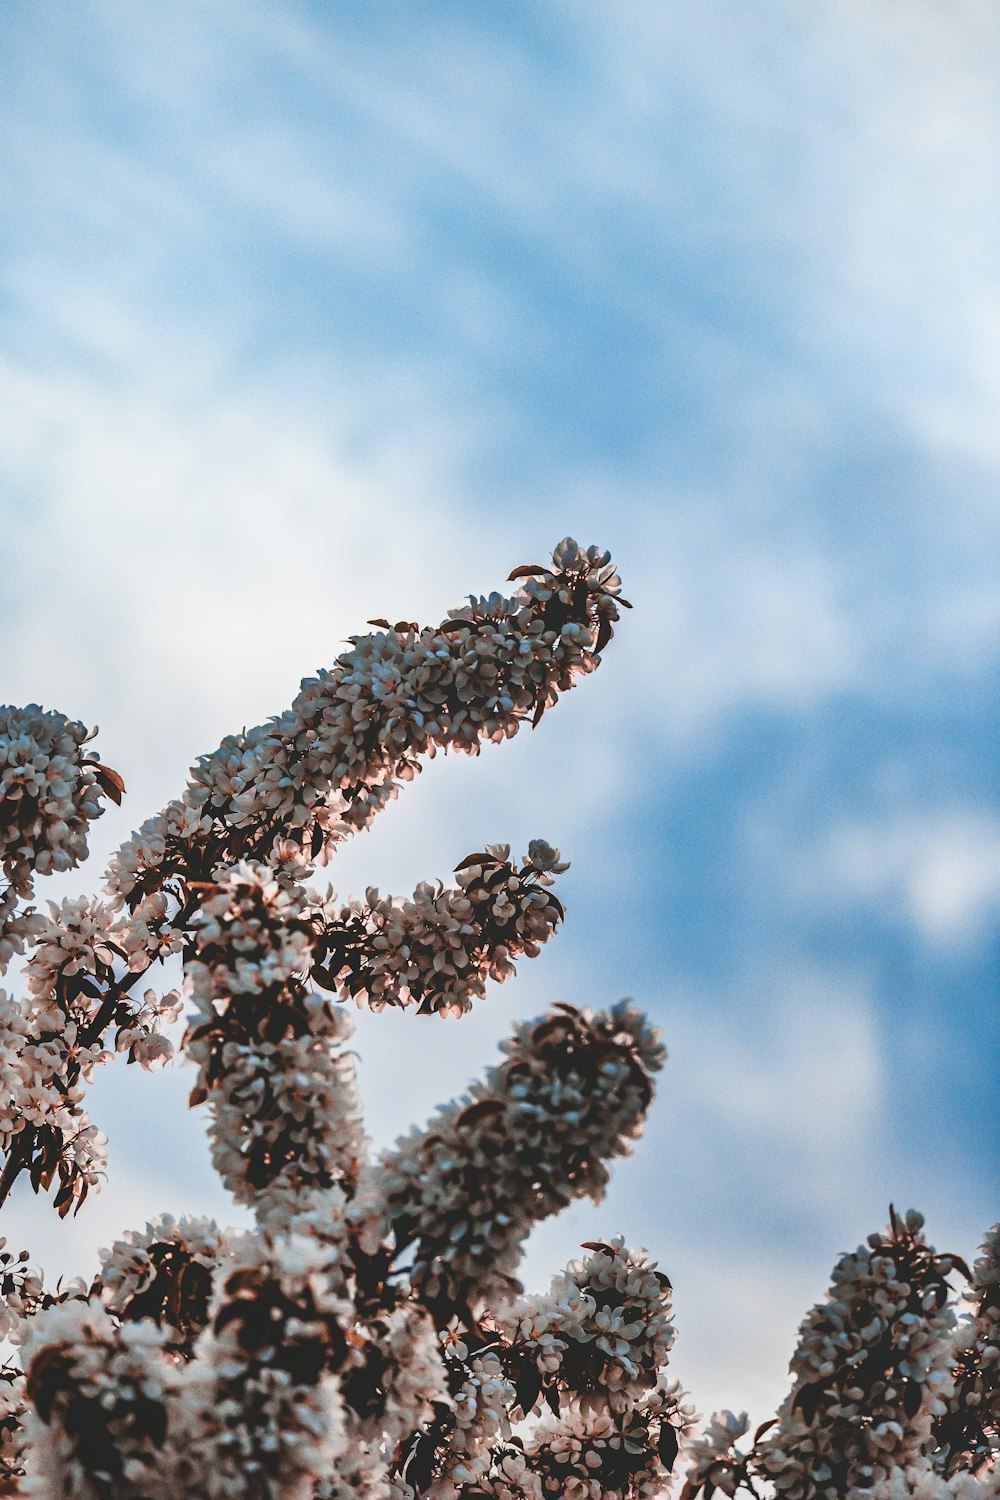 brown plant under blue sky during daytime